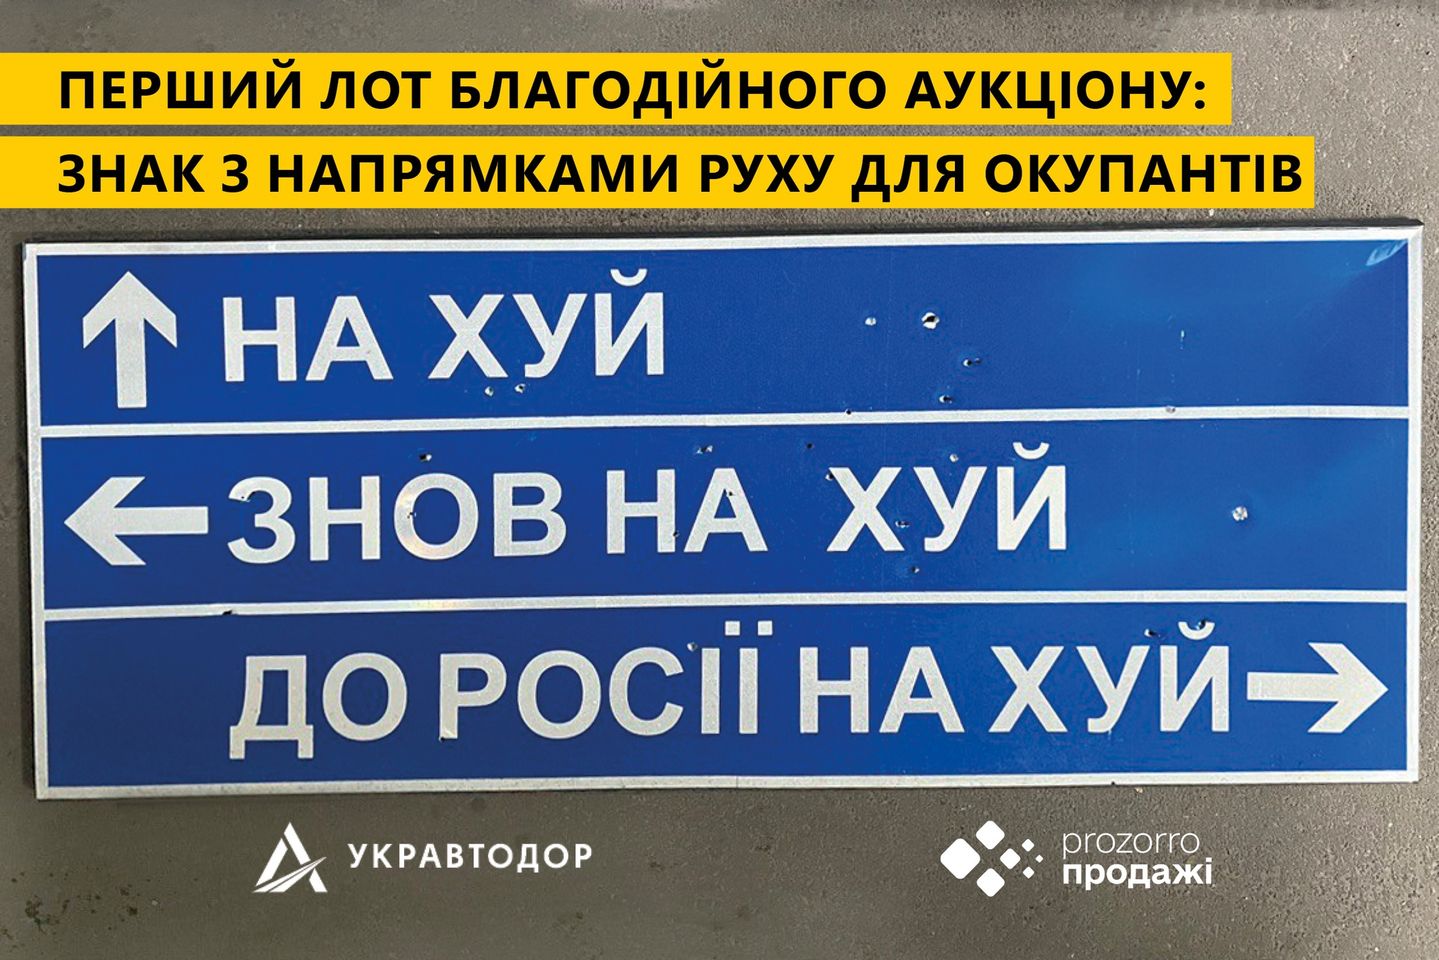 "Nah*y, new nah*y, do Rosji nah*y" - Ukravtodor sprzeda na aukcji legendarny uniwersalny znak dla okupantów